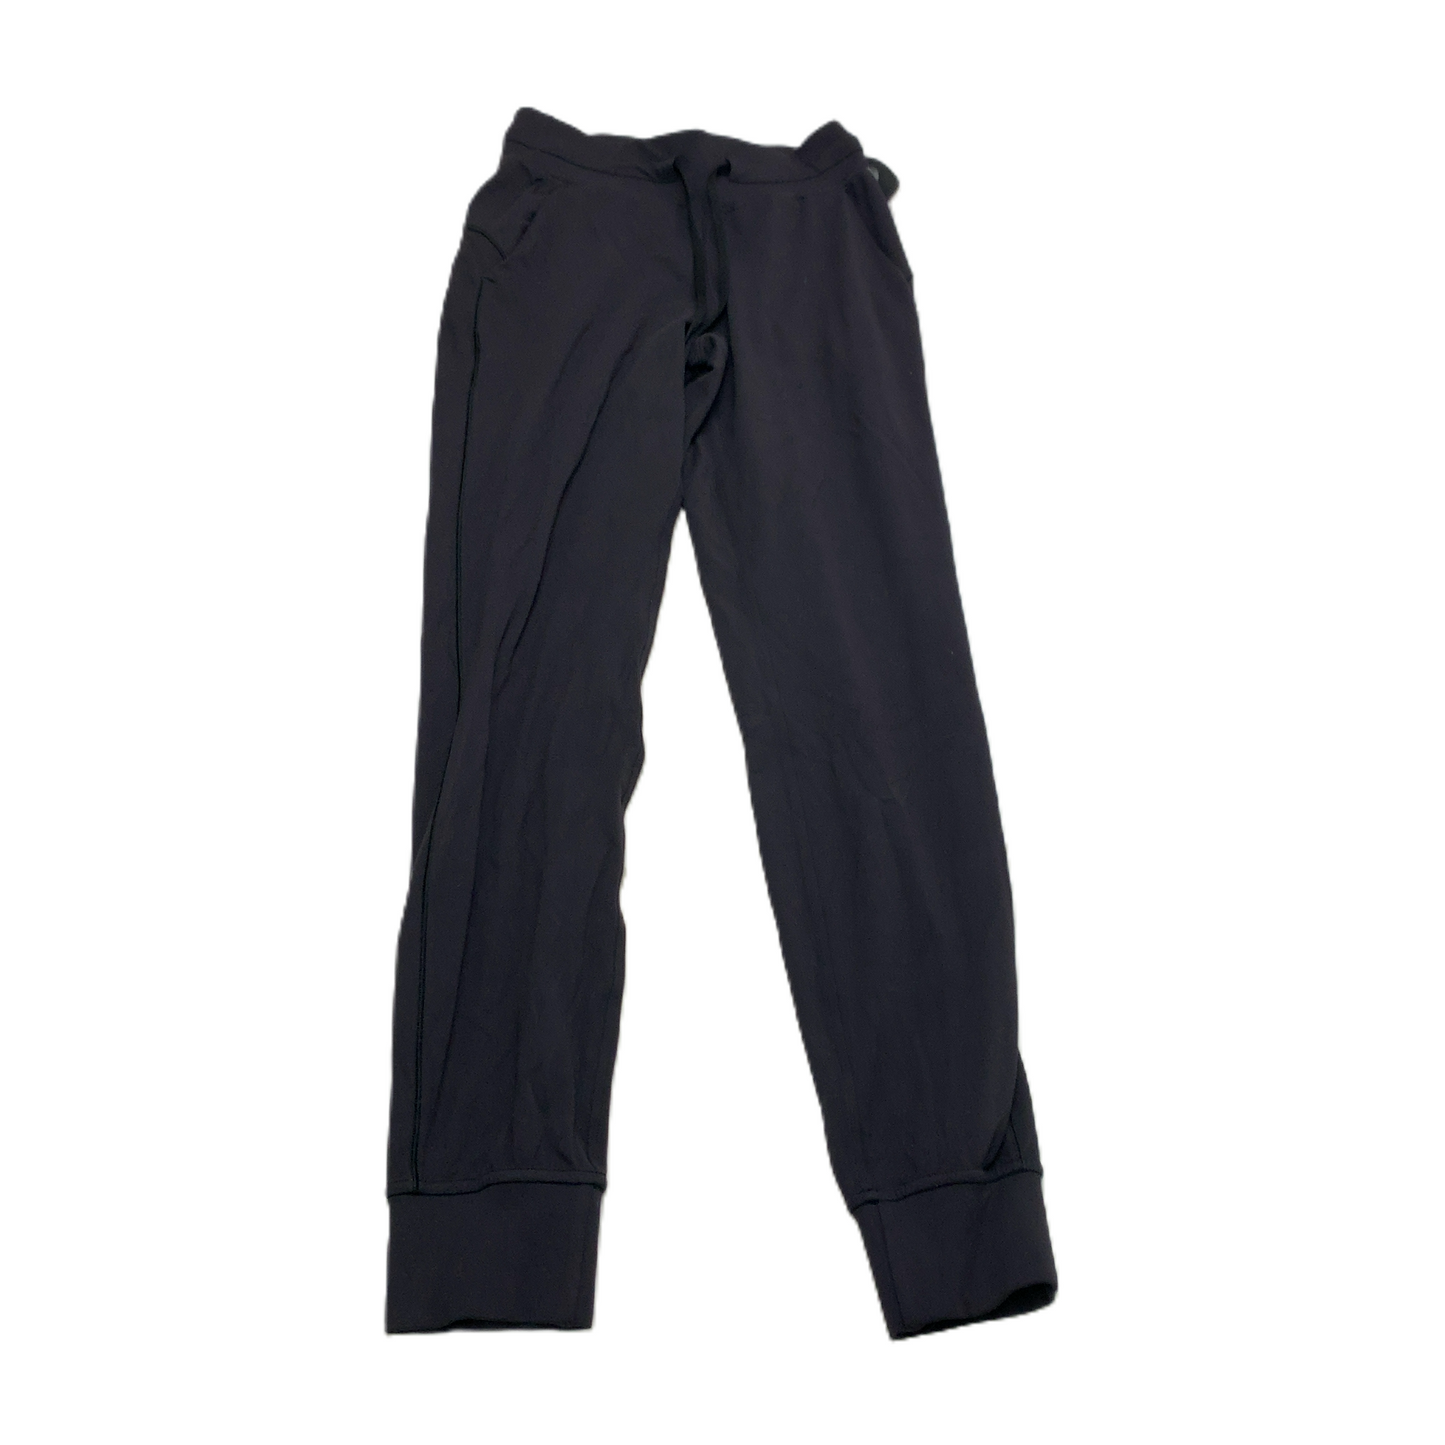 Black  Athletic Pants By Lululemon  Size: Xs